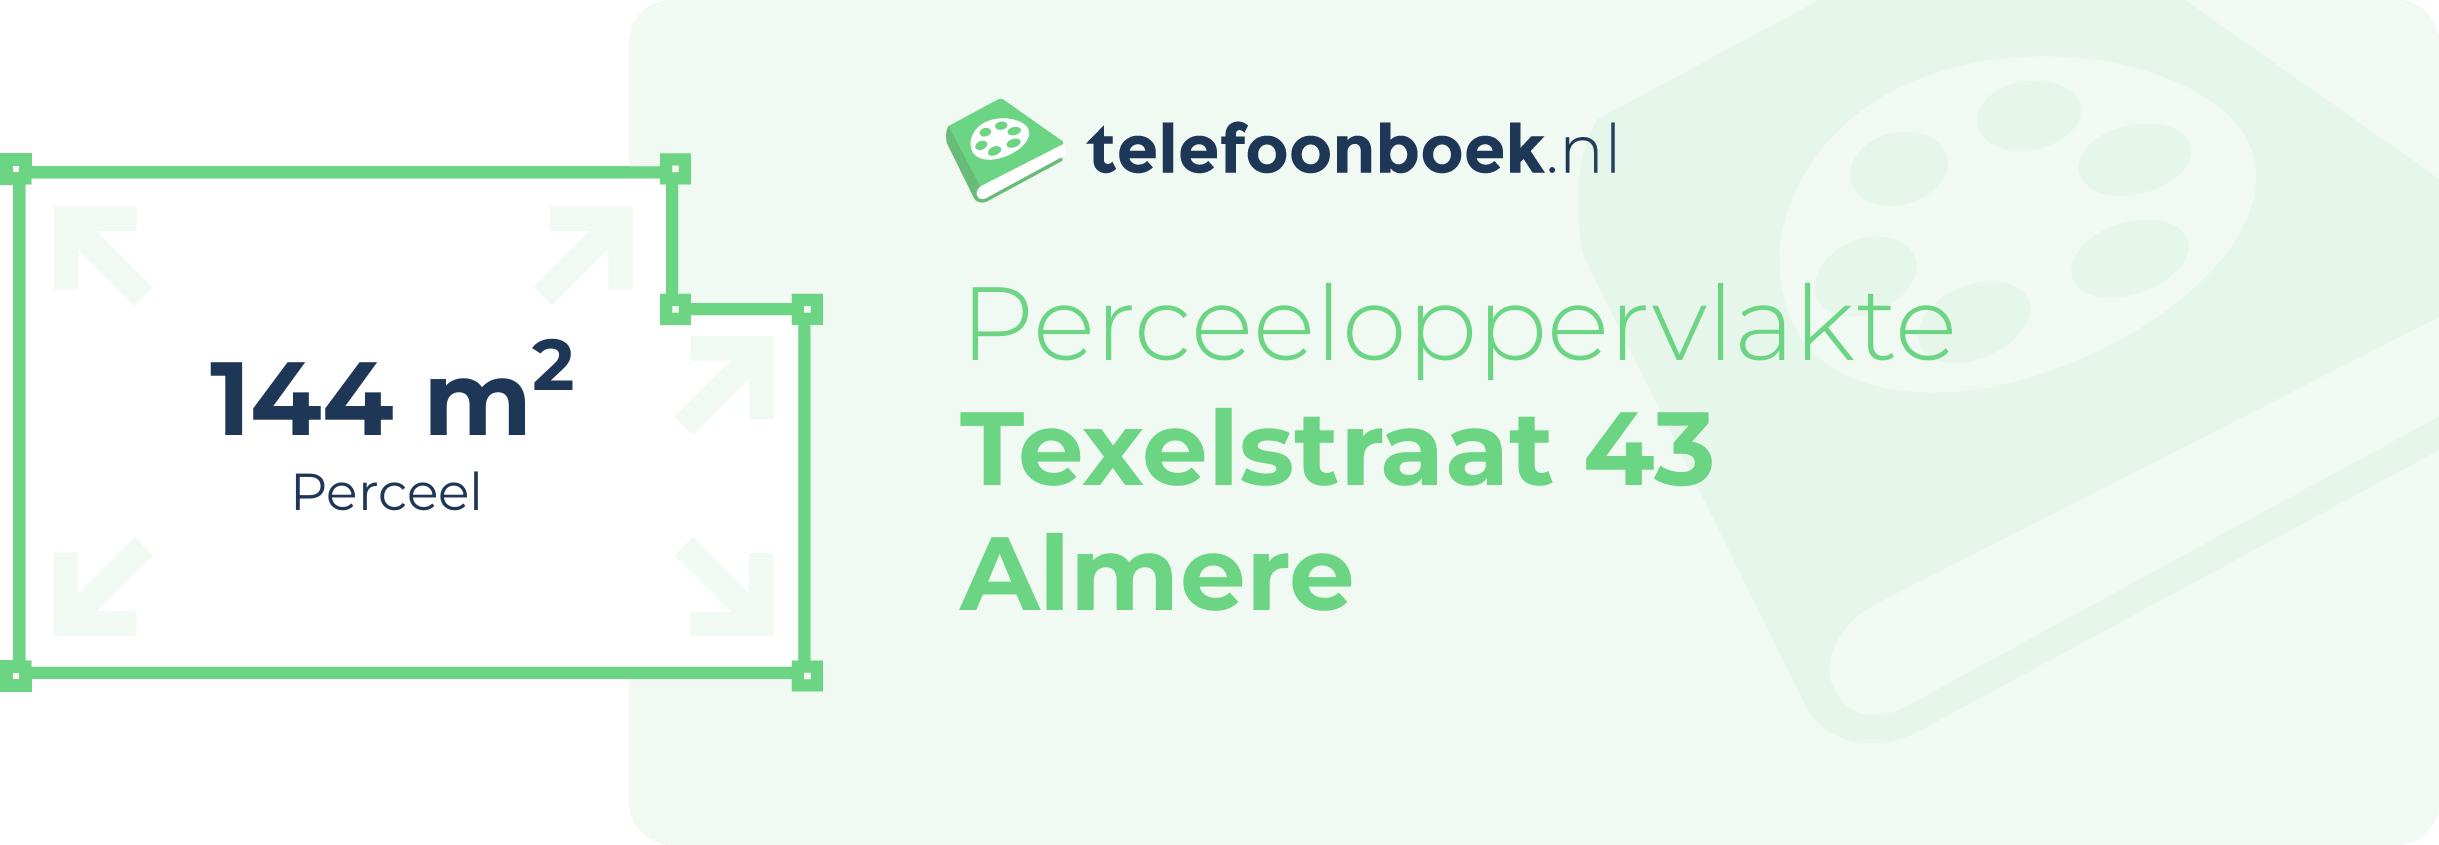 Perceeloppervlakte Texelstraat 43 Almere